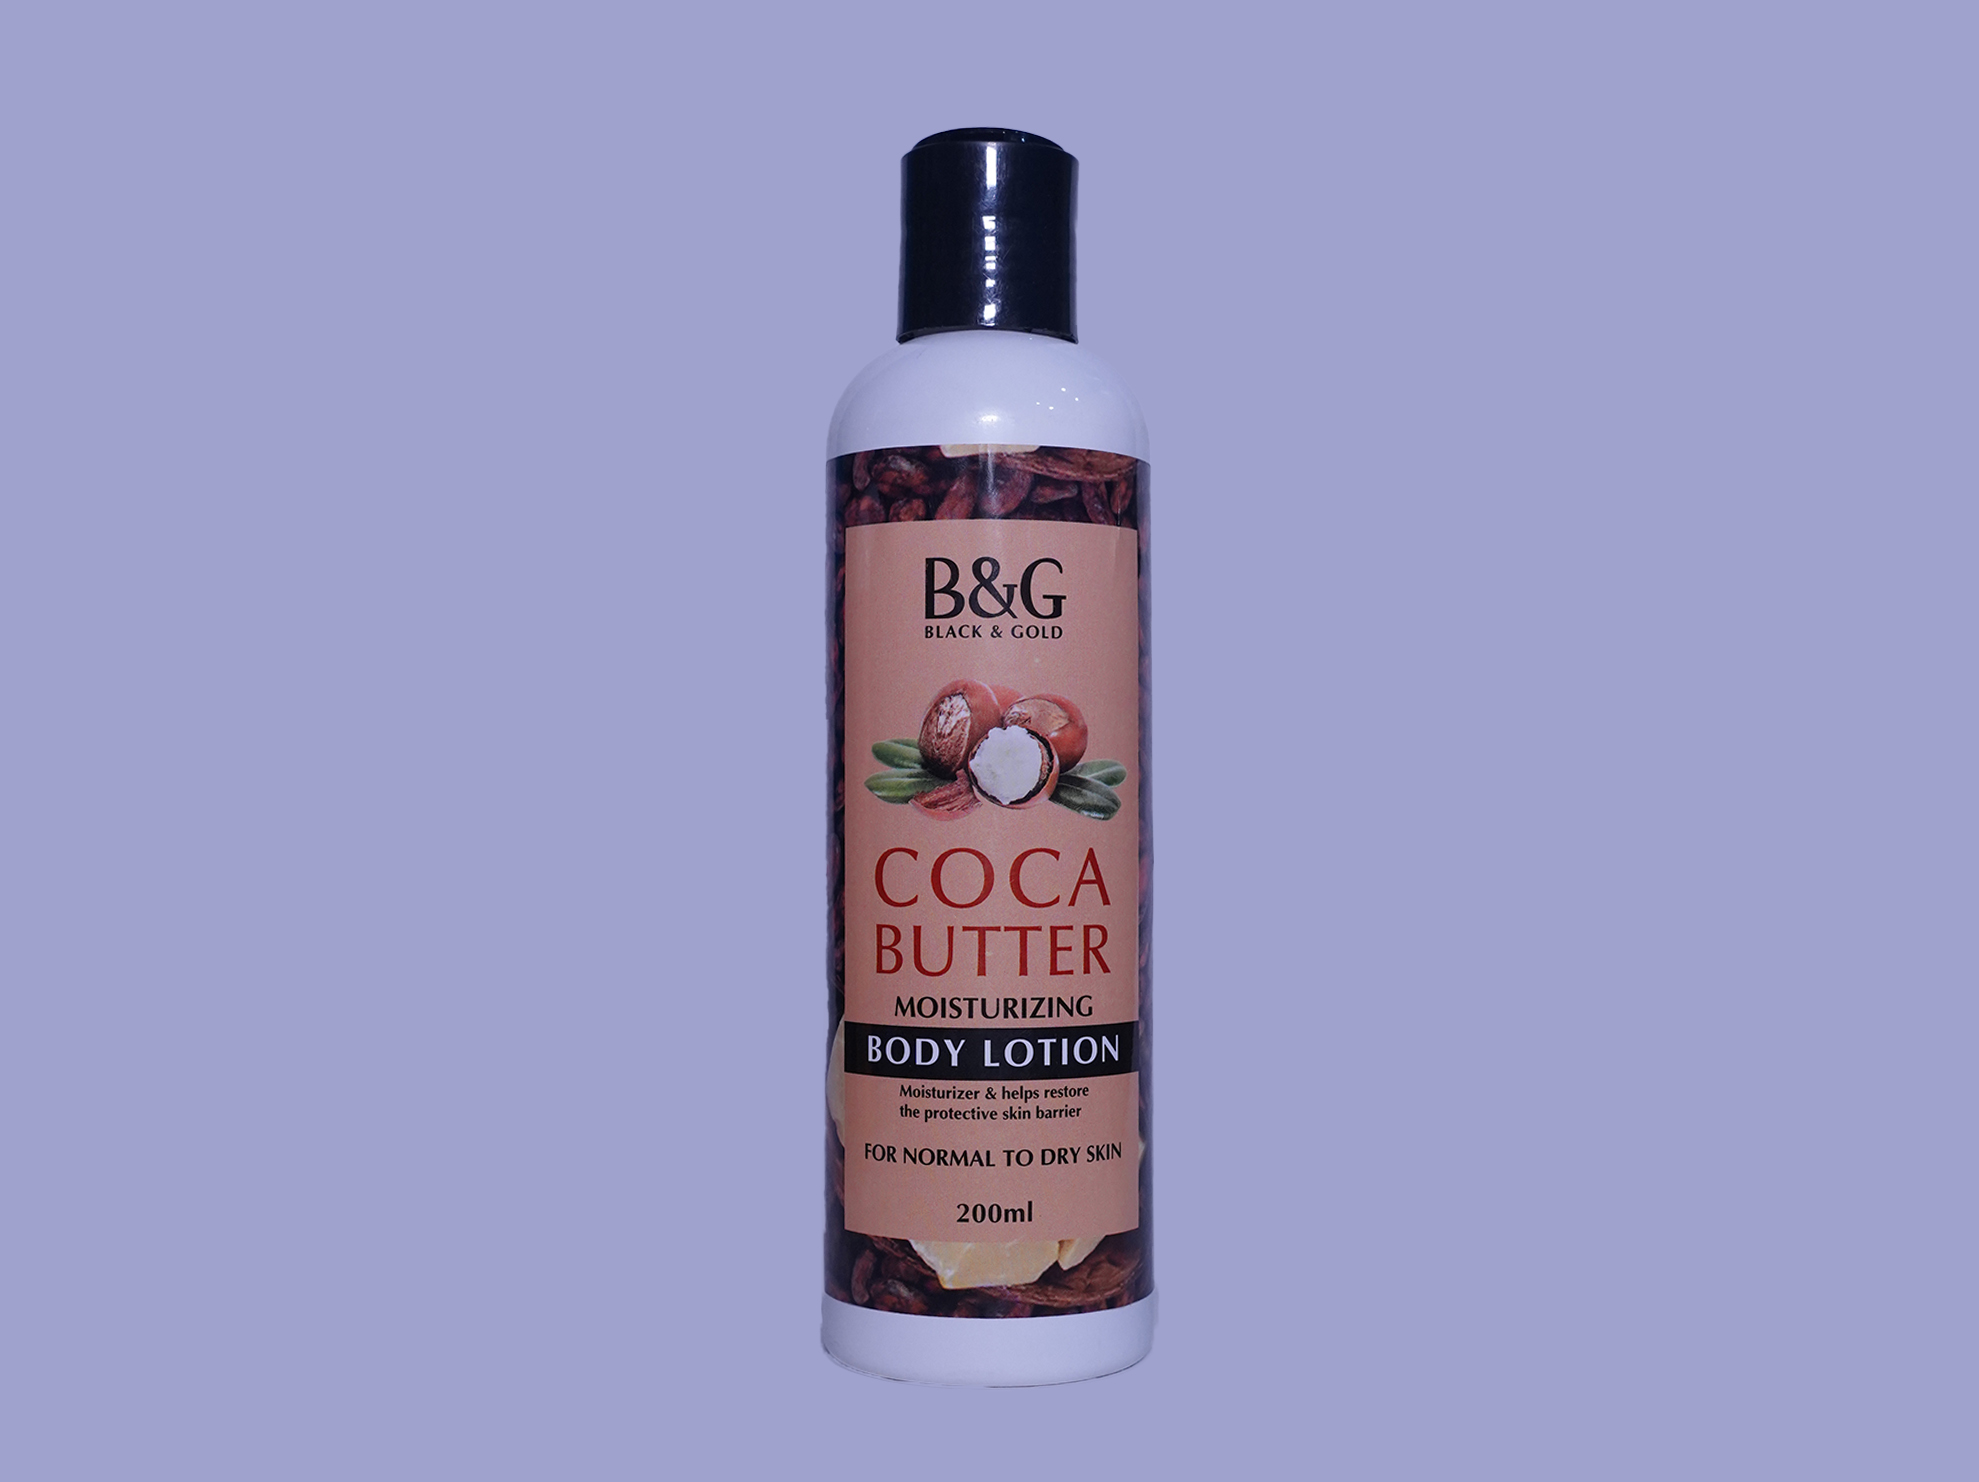 B&G Cocoa Butter Moisturizing Body Lotion